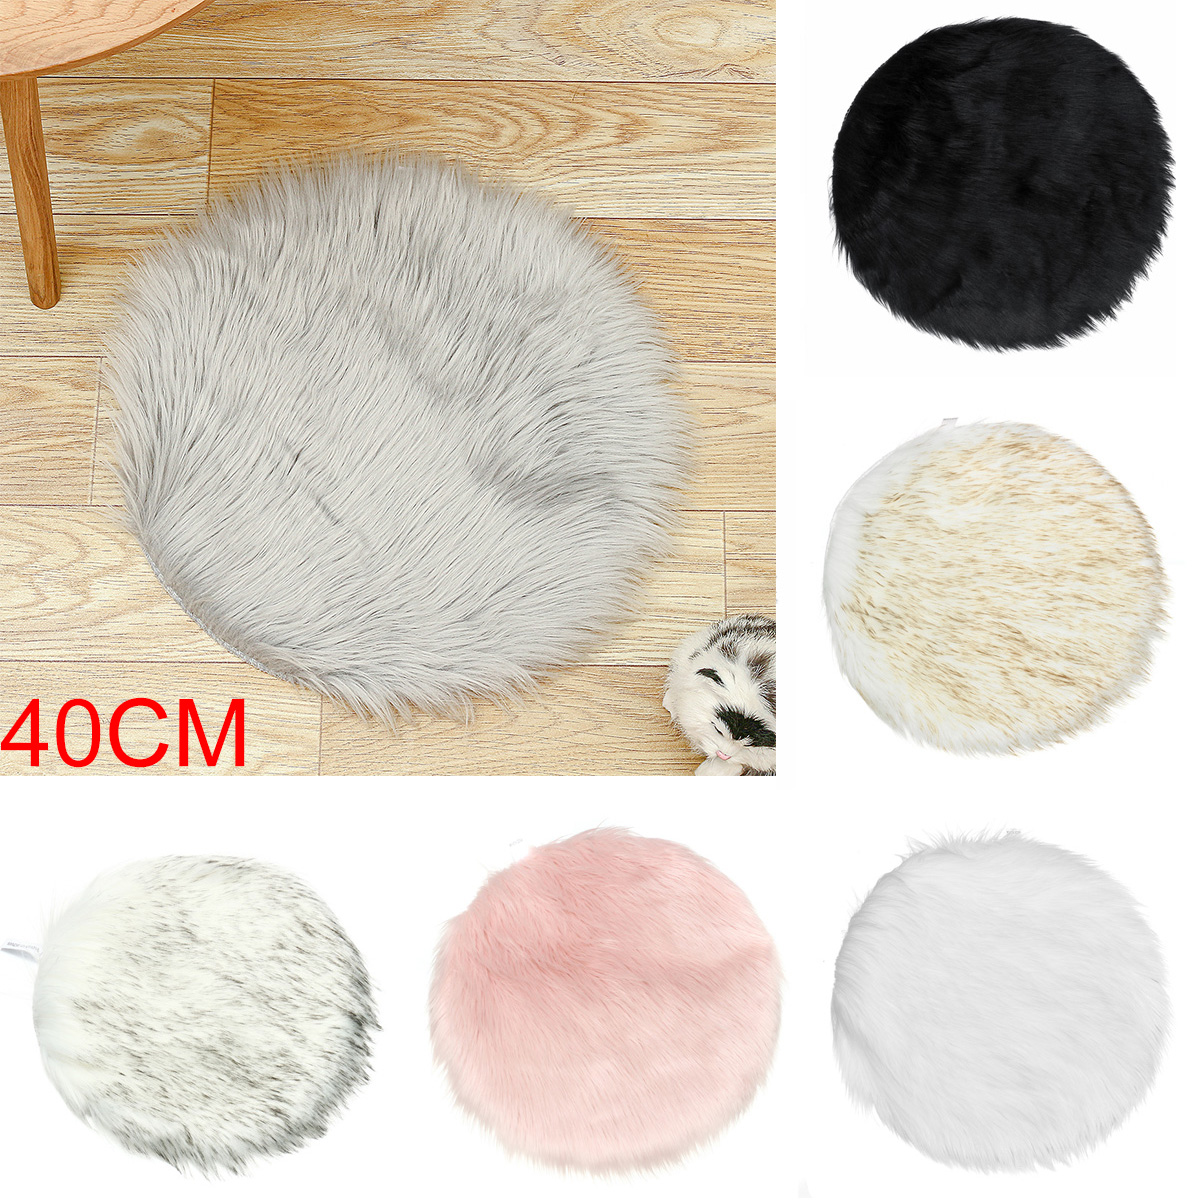 40cm-Fluffy-Rug-Round-Pad-Carpet-Hairy-Fur-Shag-Sheepskin-Bedroom-Floor-Mat-1621268-1